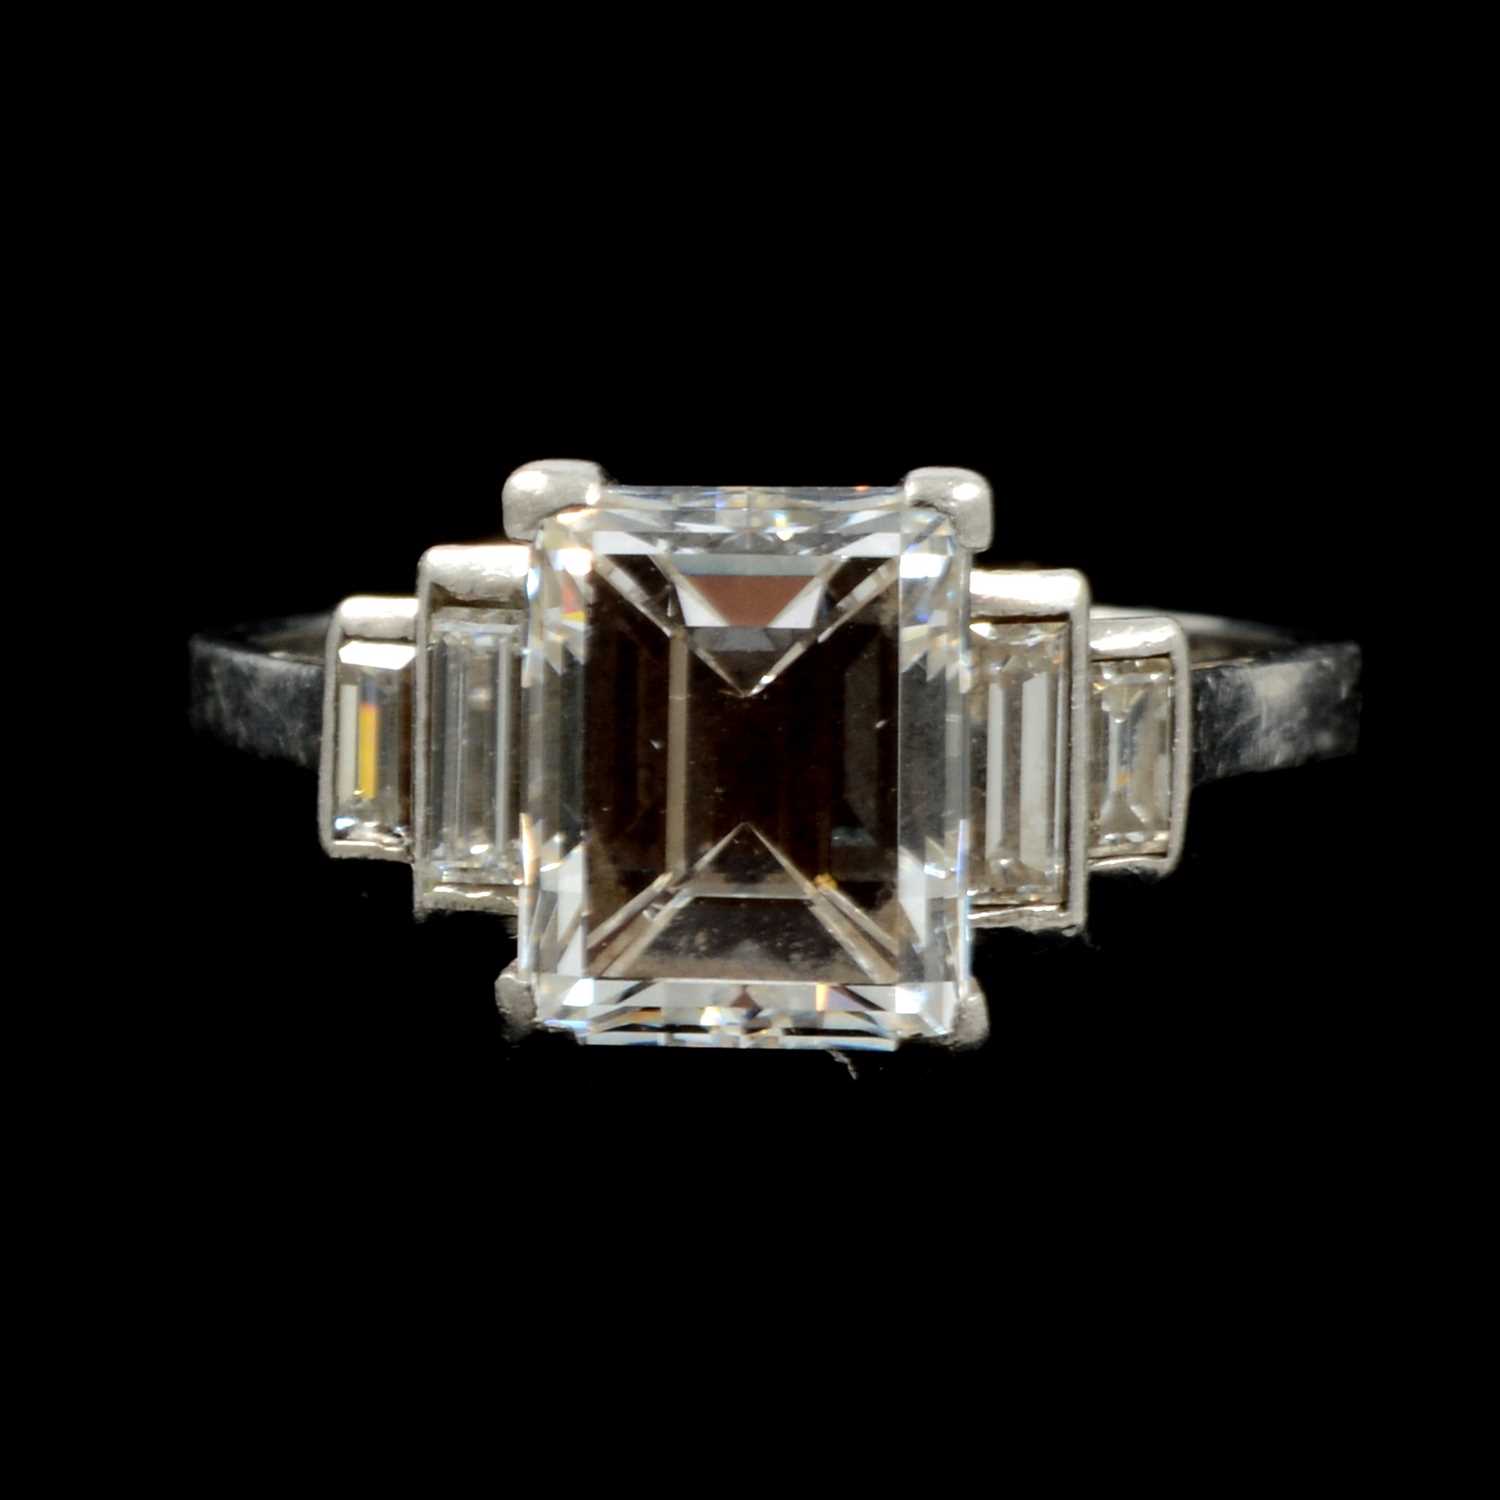 14 - A diamond solitaire ring, rectangular step cut stone, 2.38 carats. 